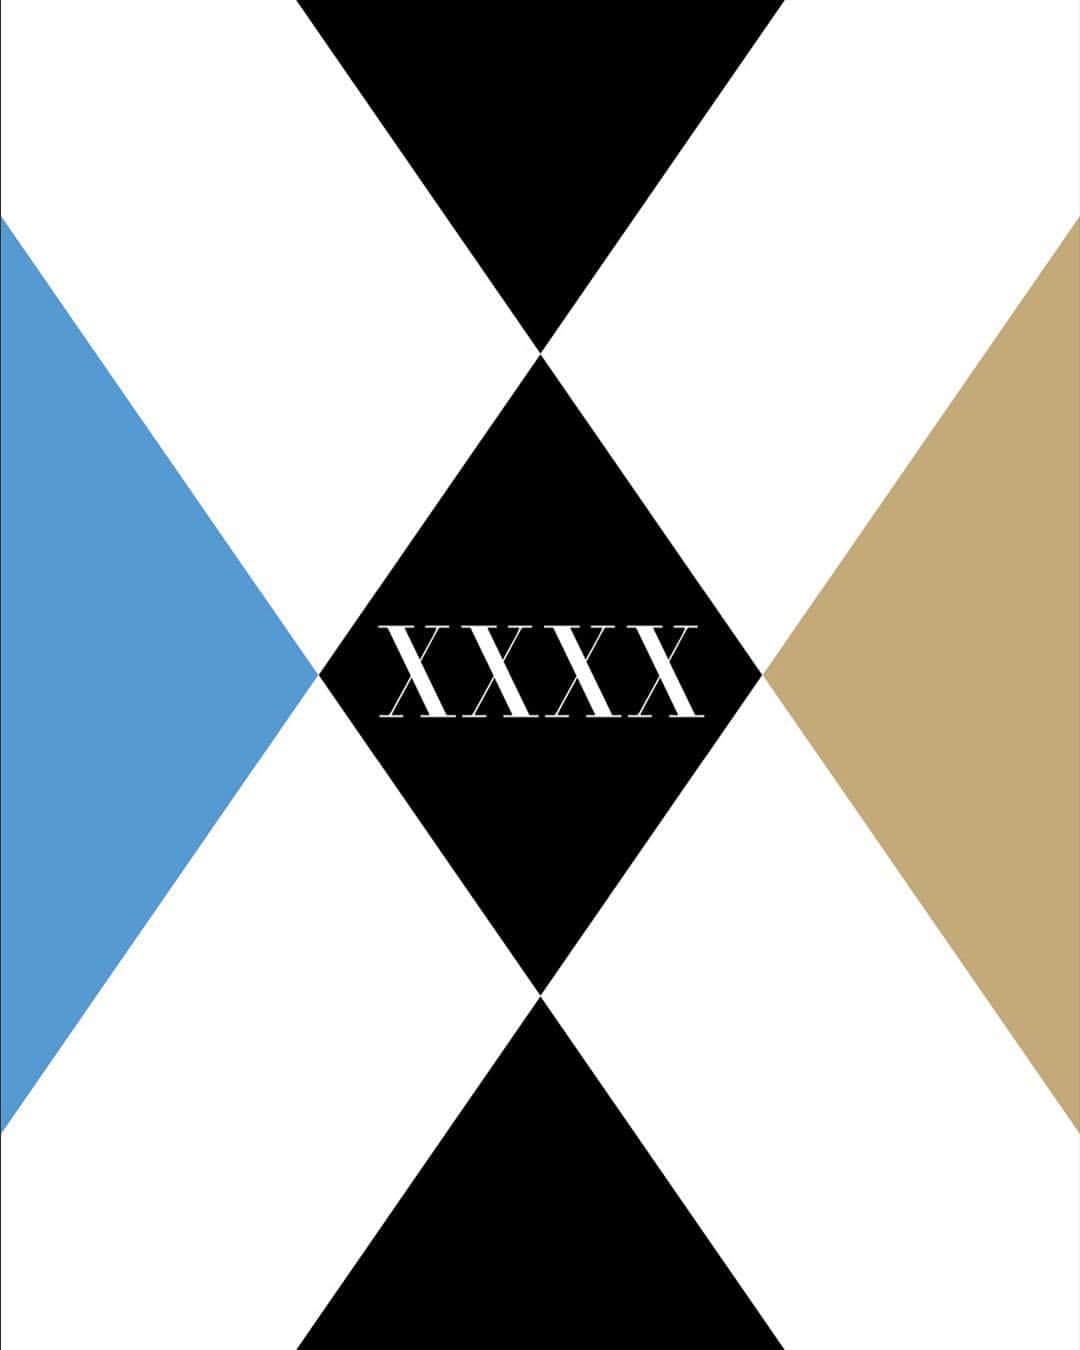 X4のインスタグラム：「T-MAX X4のフルアルバム「XXXX」の発売日がいよいよ後1週間まで迫って来ました！ 全15曲収録で全て新曲の超超超力作なので是非皆さんに聞いていただきたいです🙌 初回限定盤には盛りだくさんすぎる特典付いてるので是非！！」